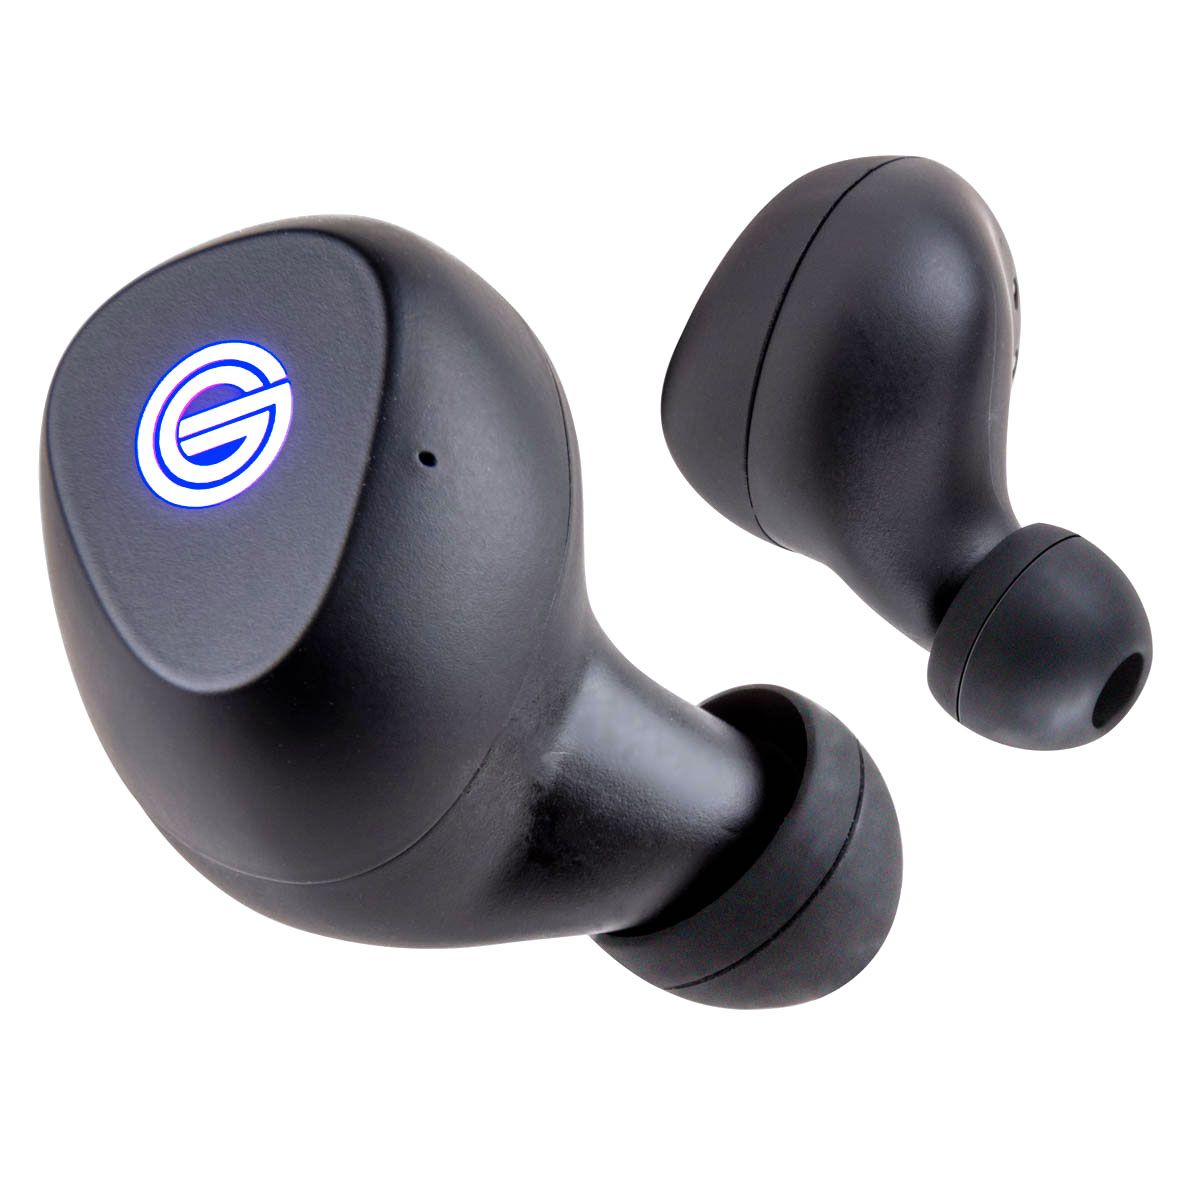 Grado GT220 Wireless Over-Ear Headphones